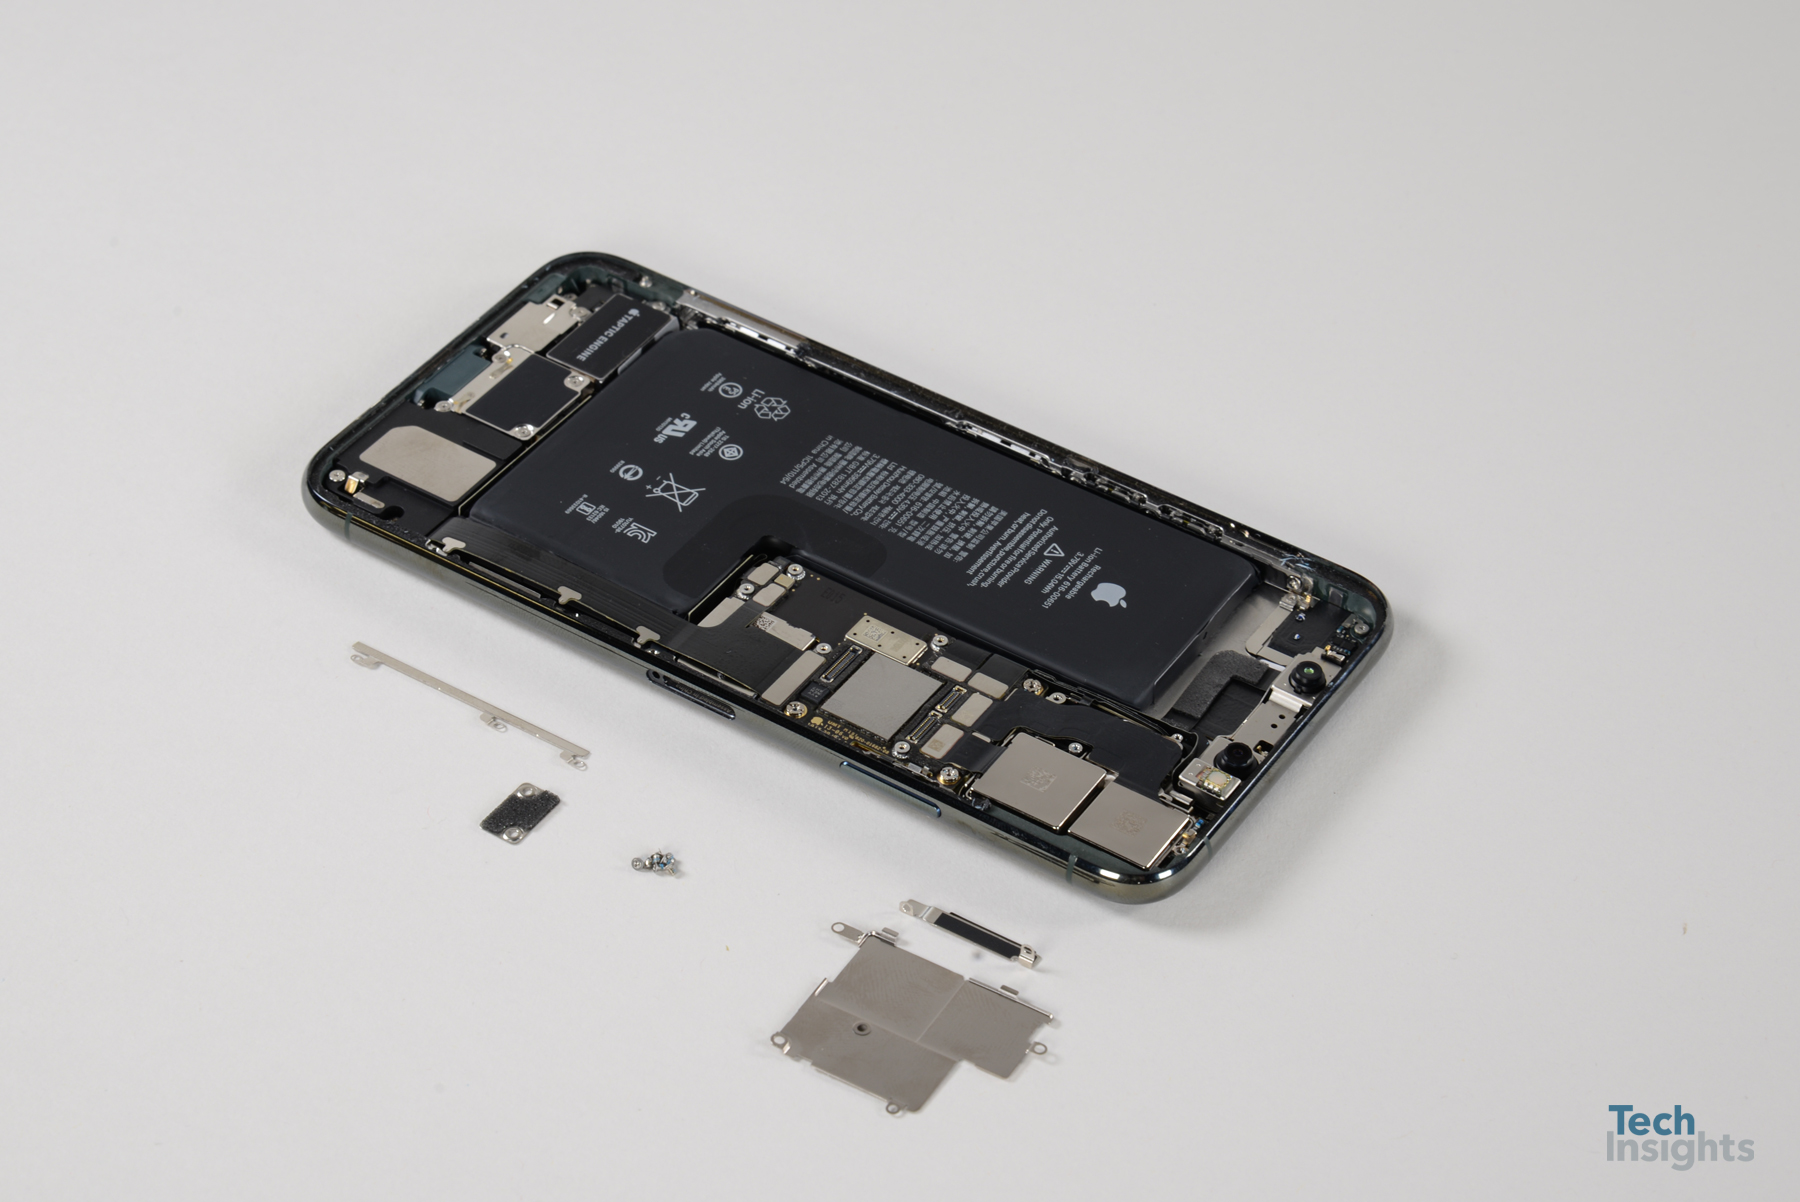 Apple iPhone 11 Pro Max Teardown